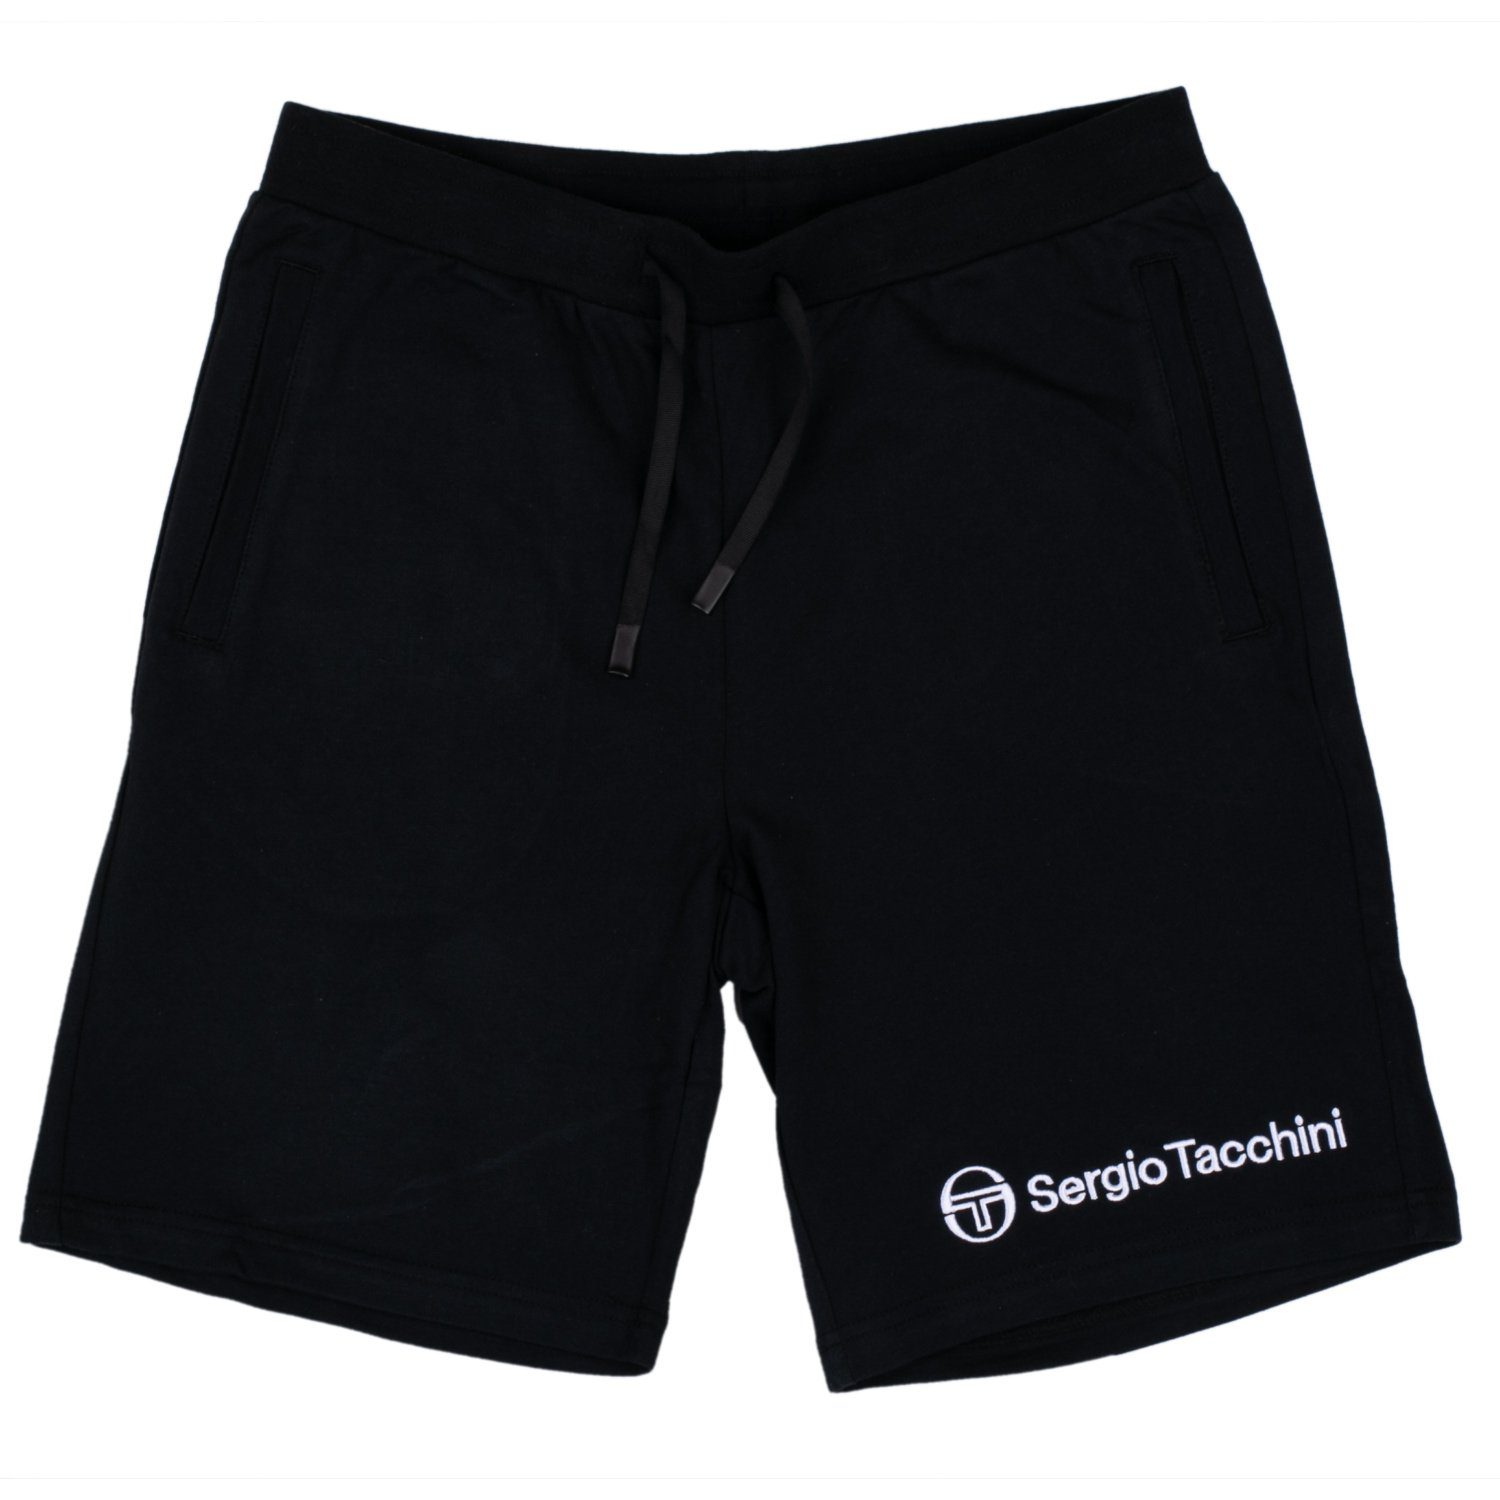 Shorts Herren Shorts black/white 021 Sergio Sergio Asis Tacchini Tacchini